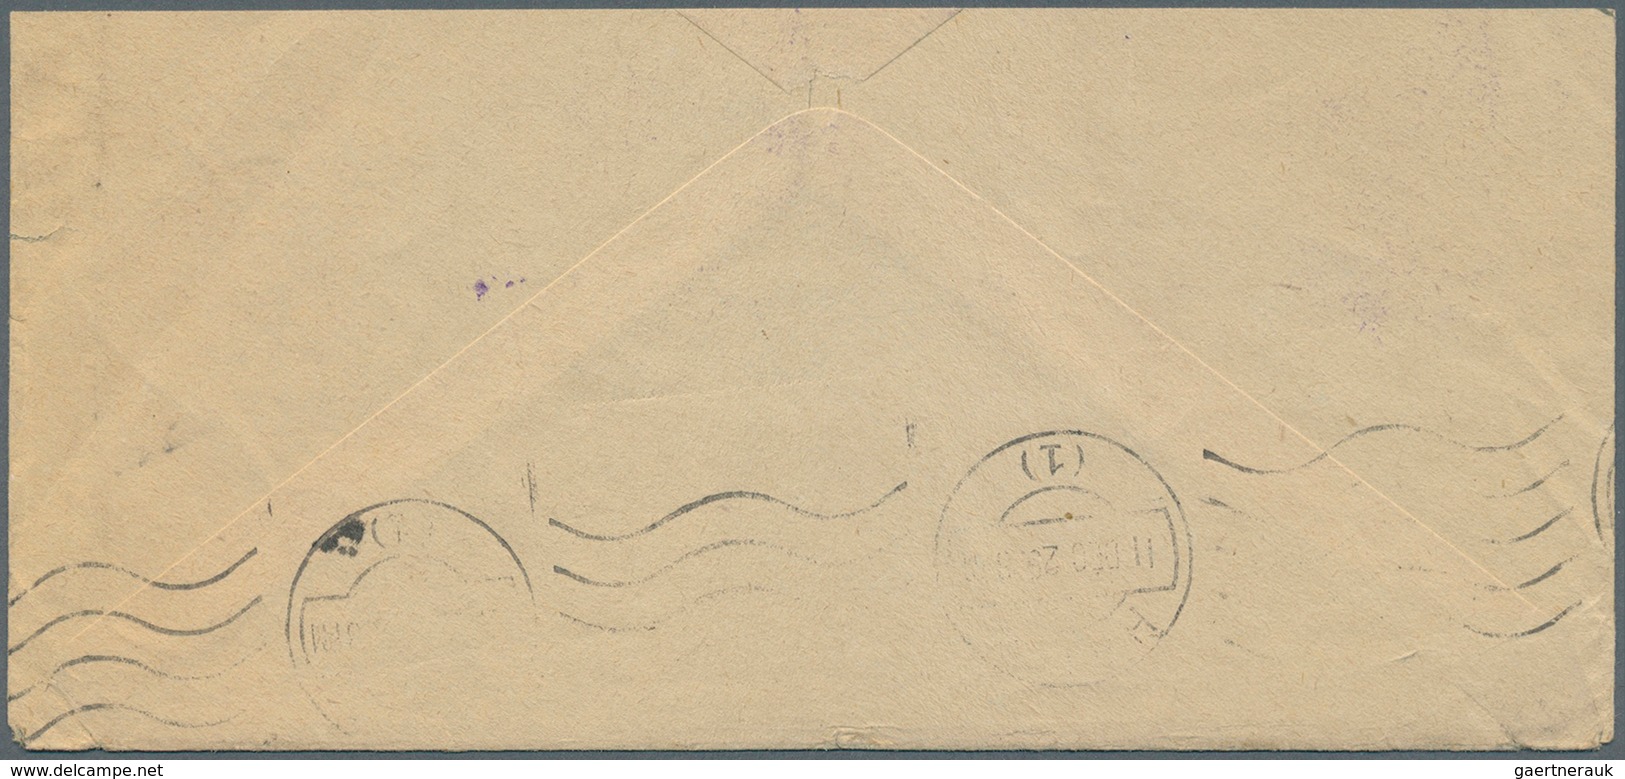 Jordanien: MADABA (type D1): 1925 (9.12.), Cut Down Cover Bearing Four Optd. Palestine Stamps Used W - Jordanië